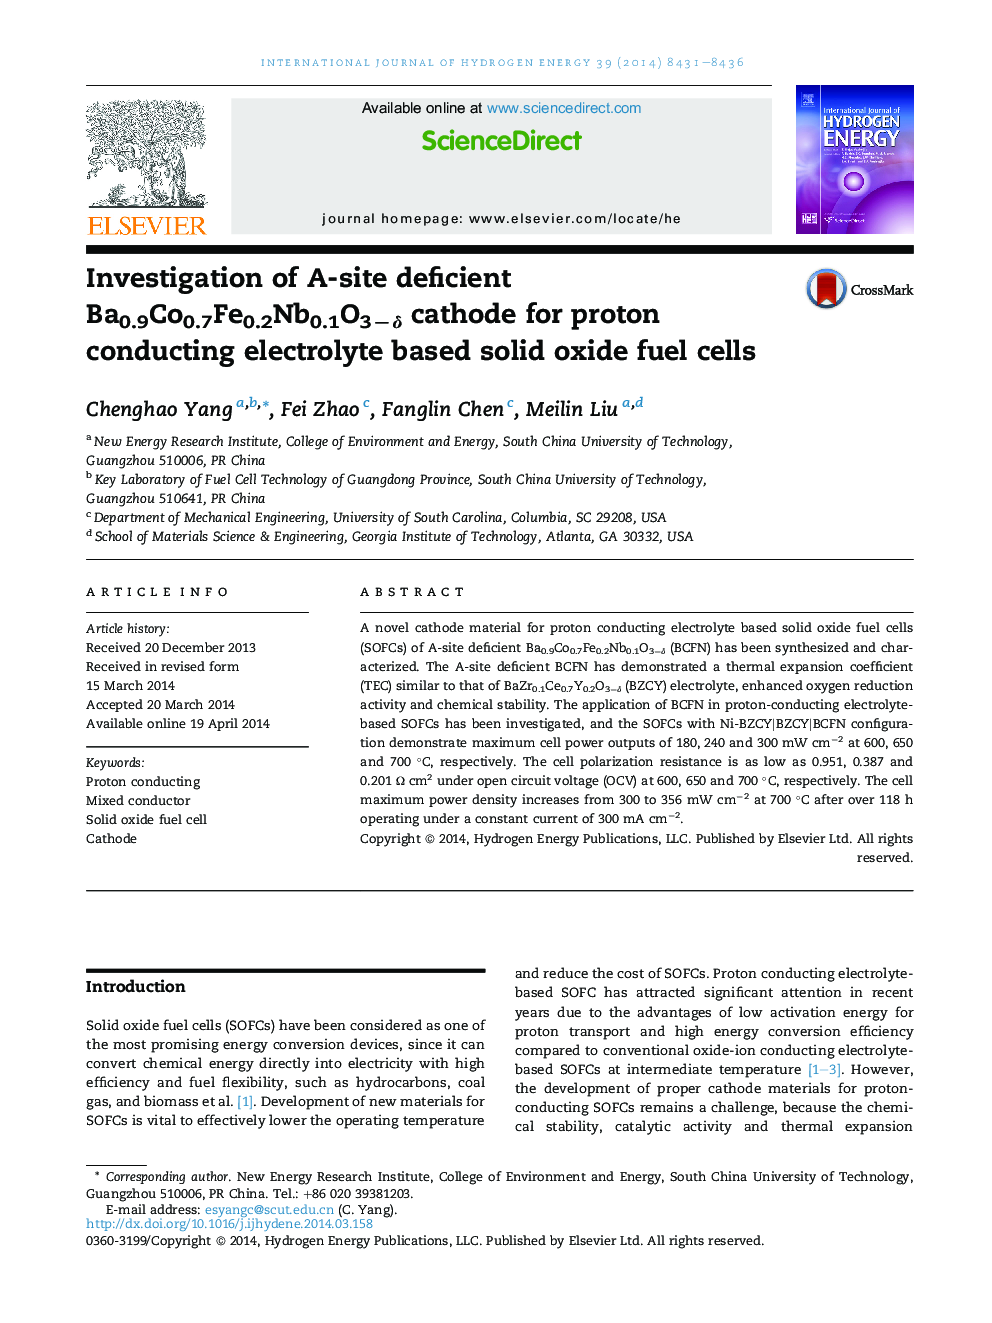 Investigation of A-site deficient Ba0.9Co0.7Fe0.2Nb0.1O3âÎ´ cathode for proton conducting electrolyte based solid oxide fuel cells